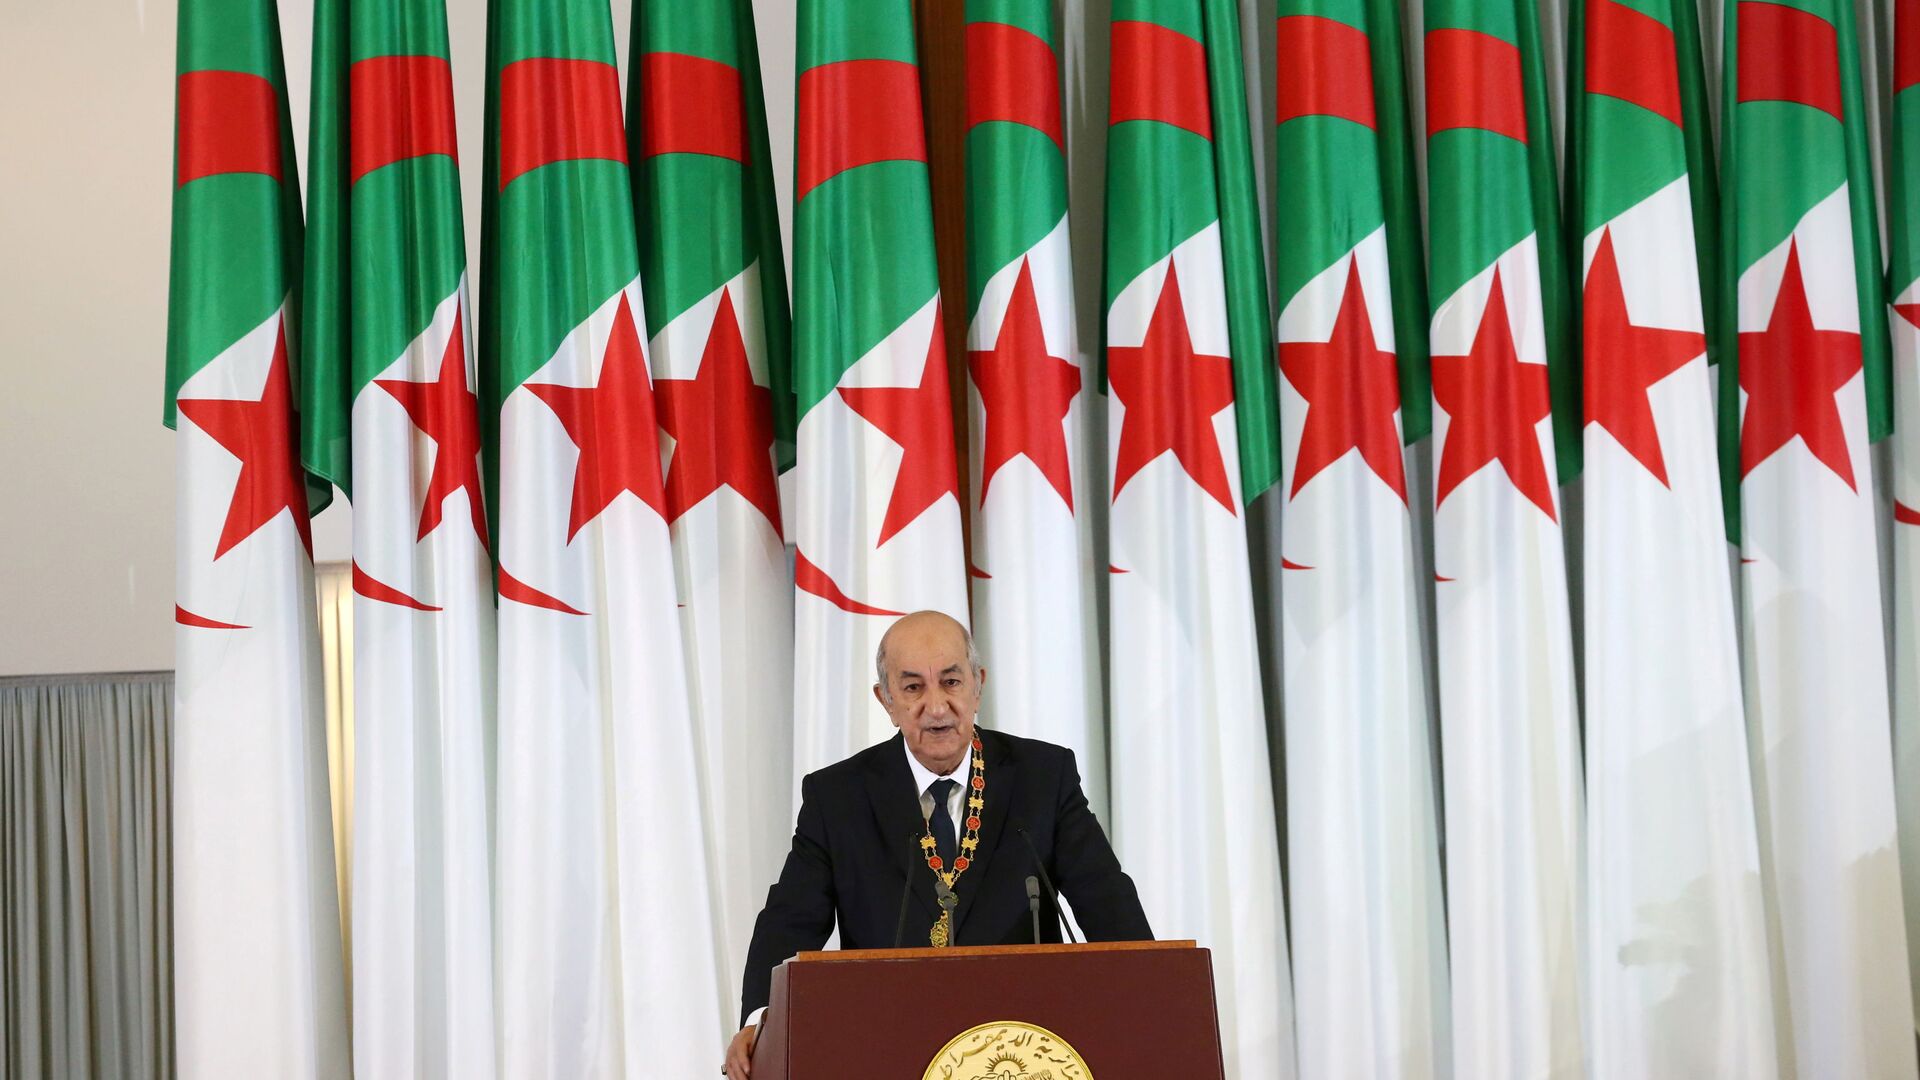 Newly elected Algerian President Abdelmadjid Tebboune delivers a speech during a swearing-in ceremony in Algiers, Algeria December 19, 2019. - Sputnik International, 1920, 04.10.2021